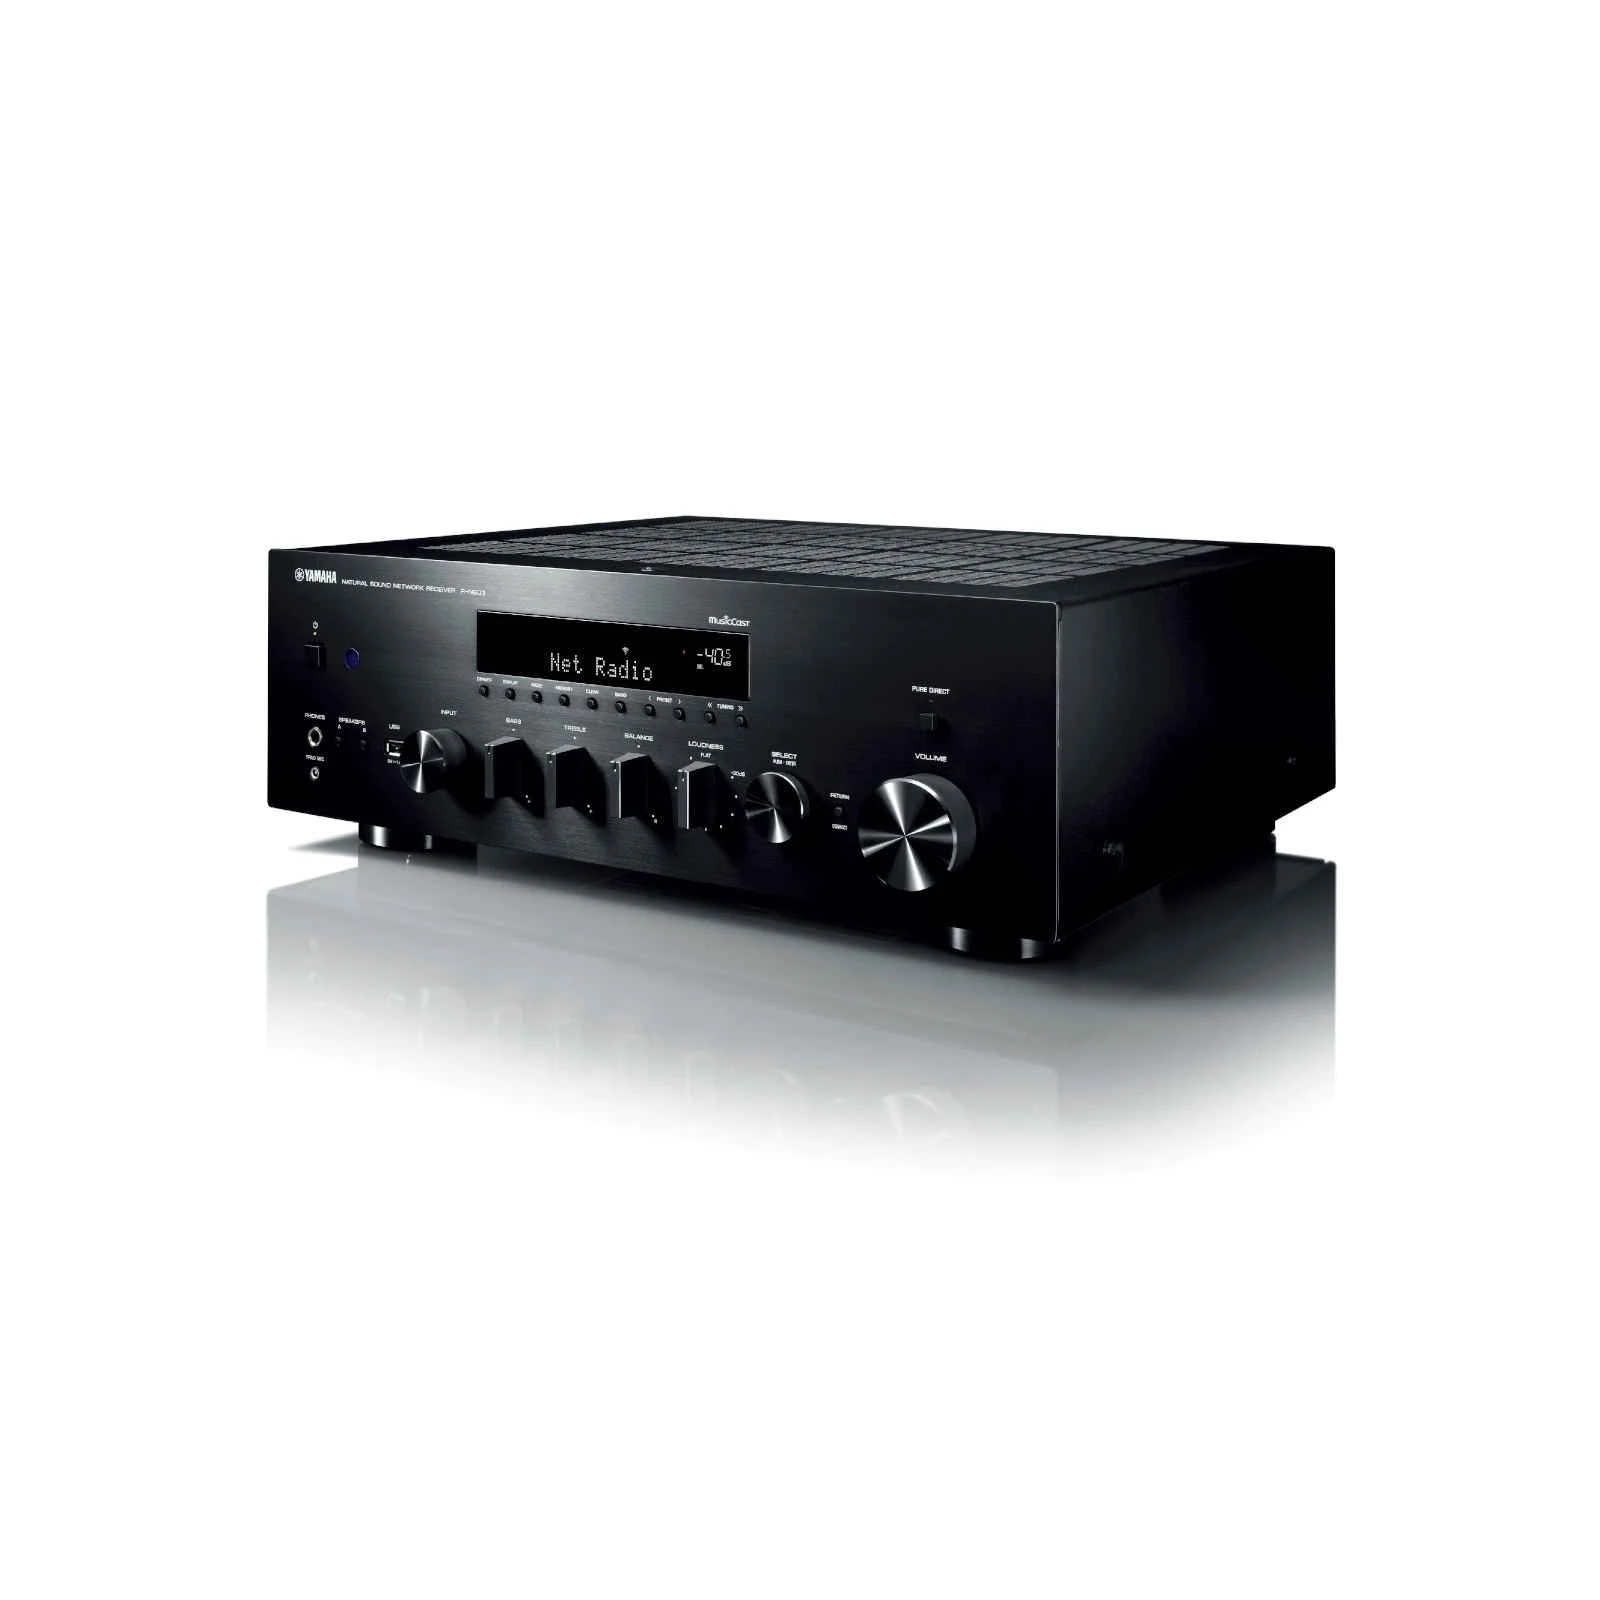 Yamaha R-N803 Hi-Fi Network Stereo Receiver